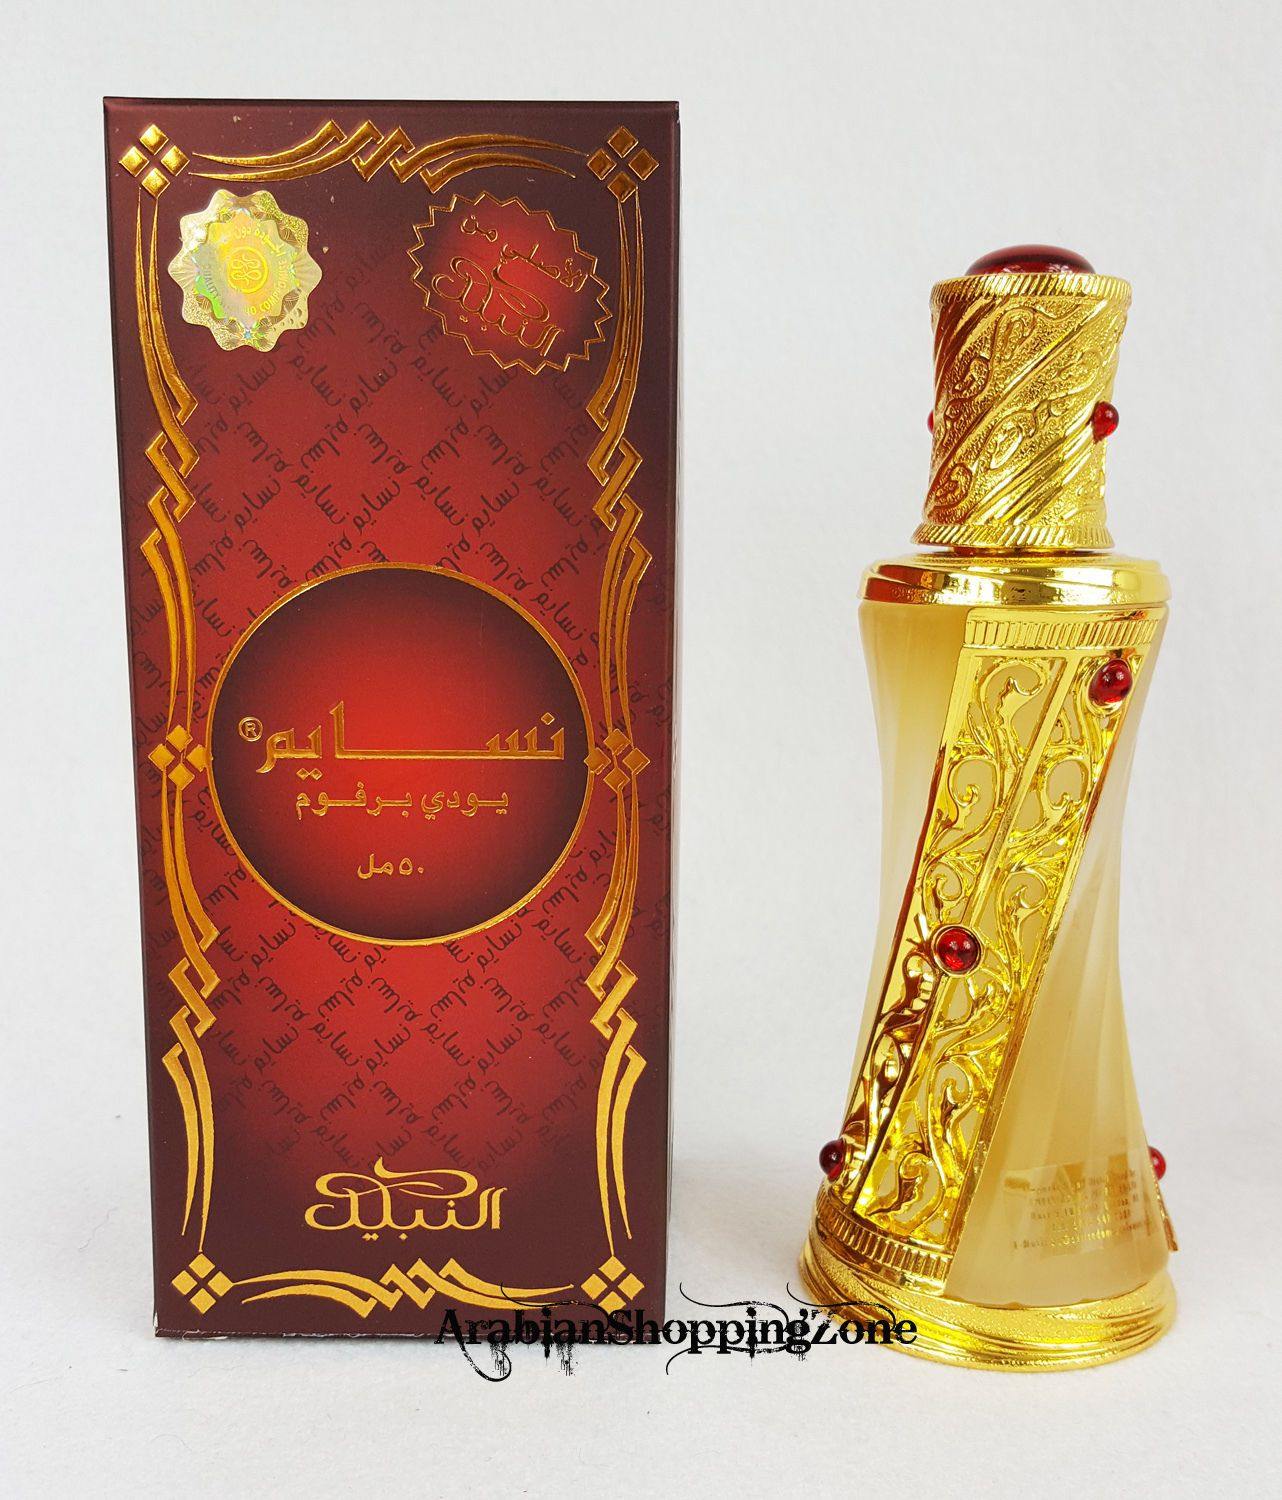 NASAEM Eau de Parfum By Nabeel 50ML Perfume Spray 1.65oz. - Arabian Shopping Zone